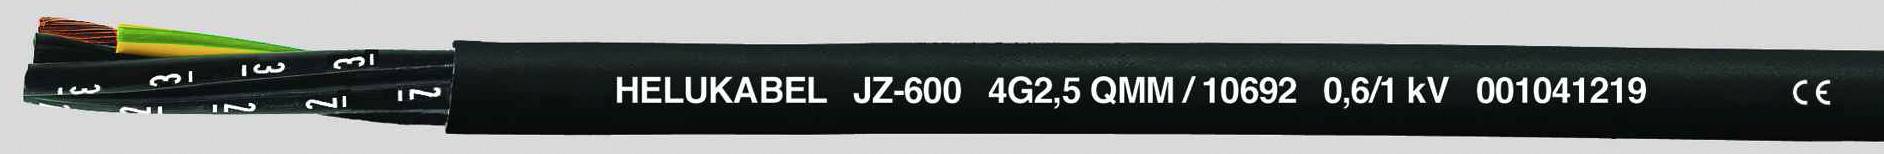 HELUKABEL JZ-600 Steuerleitung 10 G 1 mm² Schwarz 10628-500 500 m